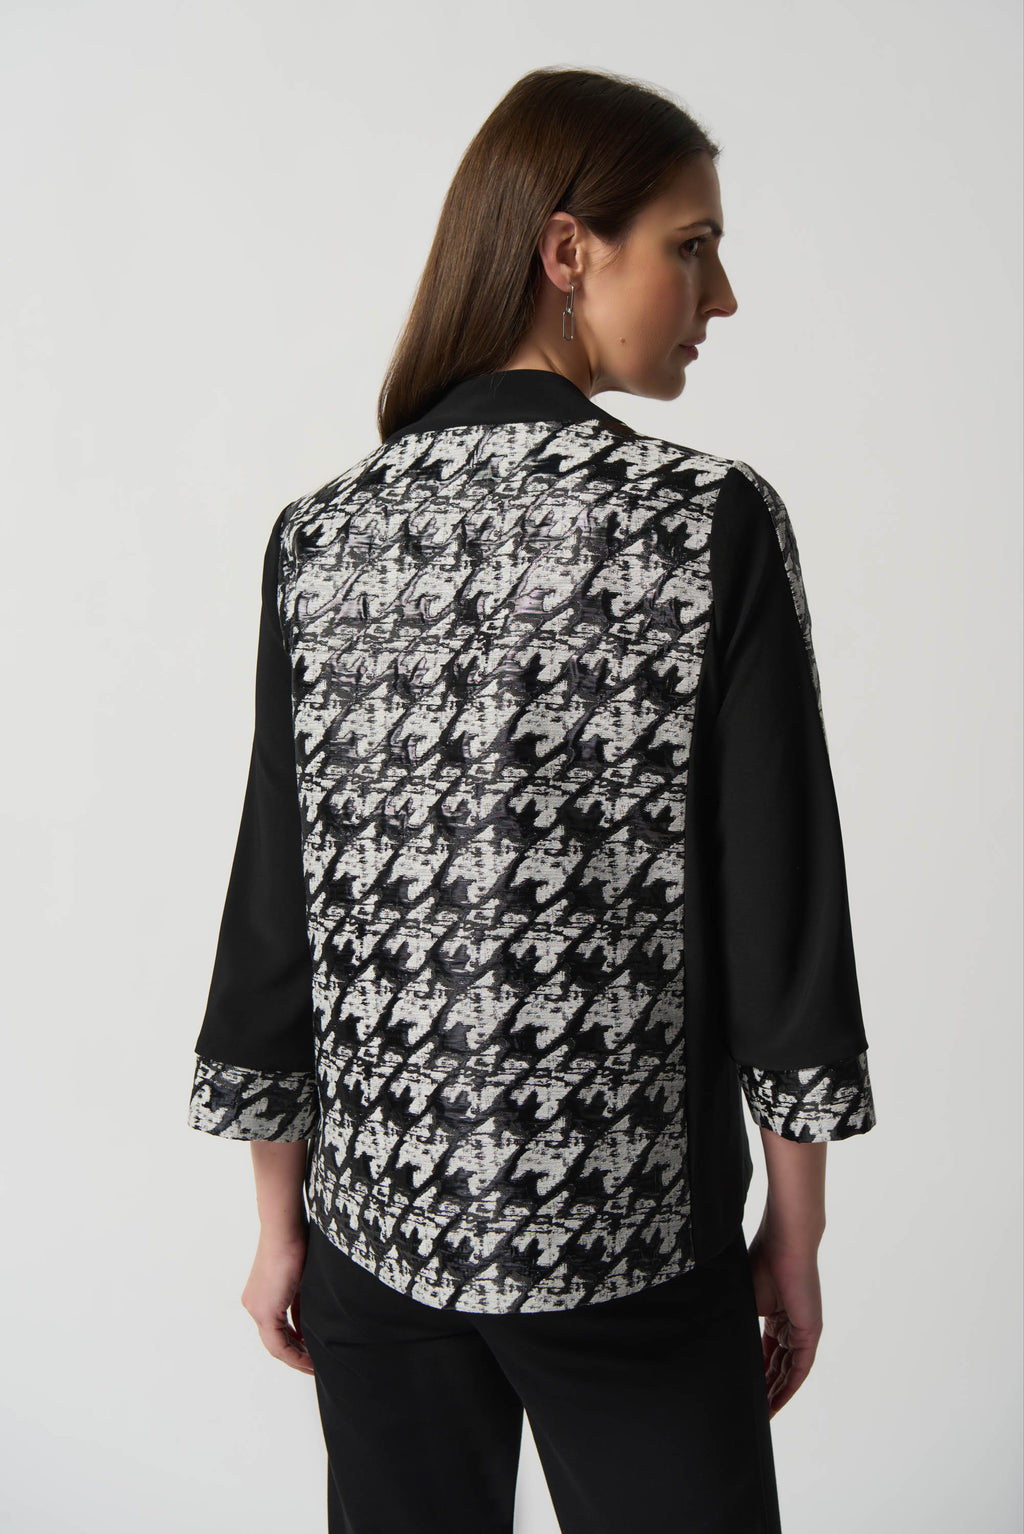 Joseph Ribkoff Black/White Colour-Block Jacket Style 233157